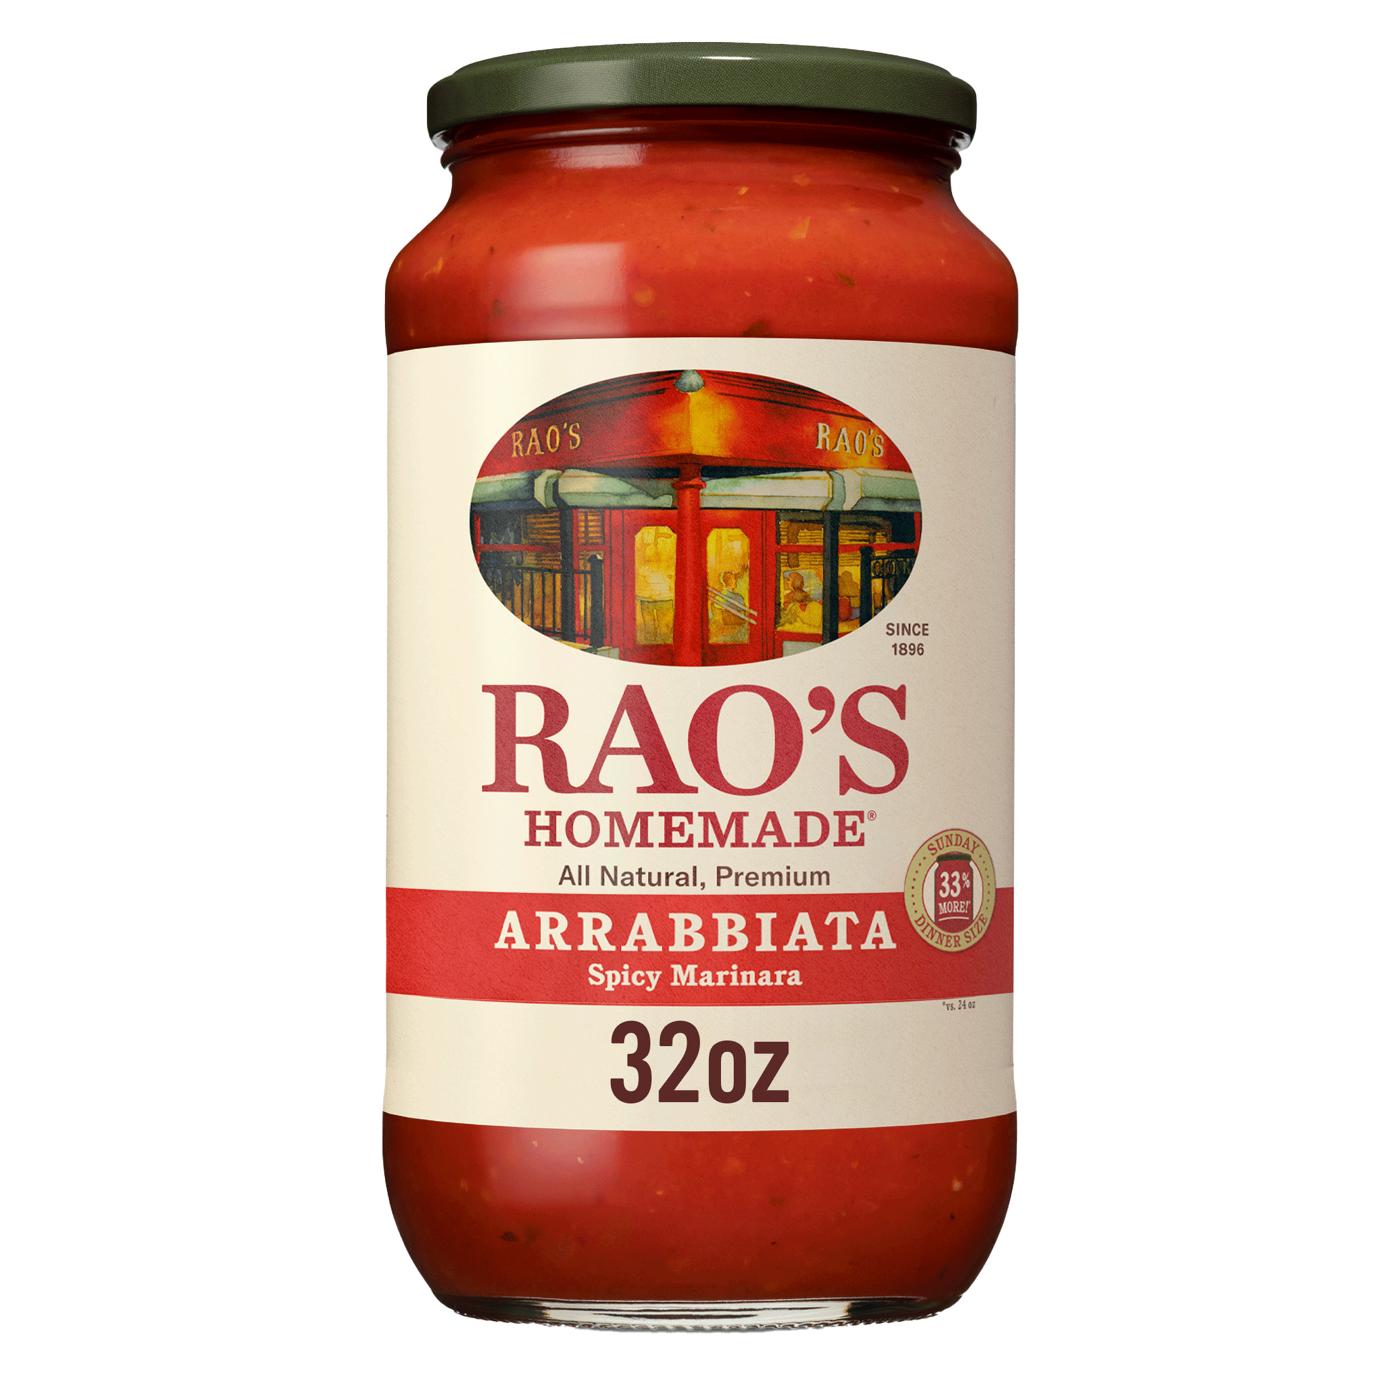 Rao's Homemade Arrabbiata Spicy Marinara Sauce; image 1 of 5